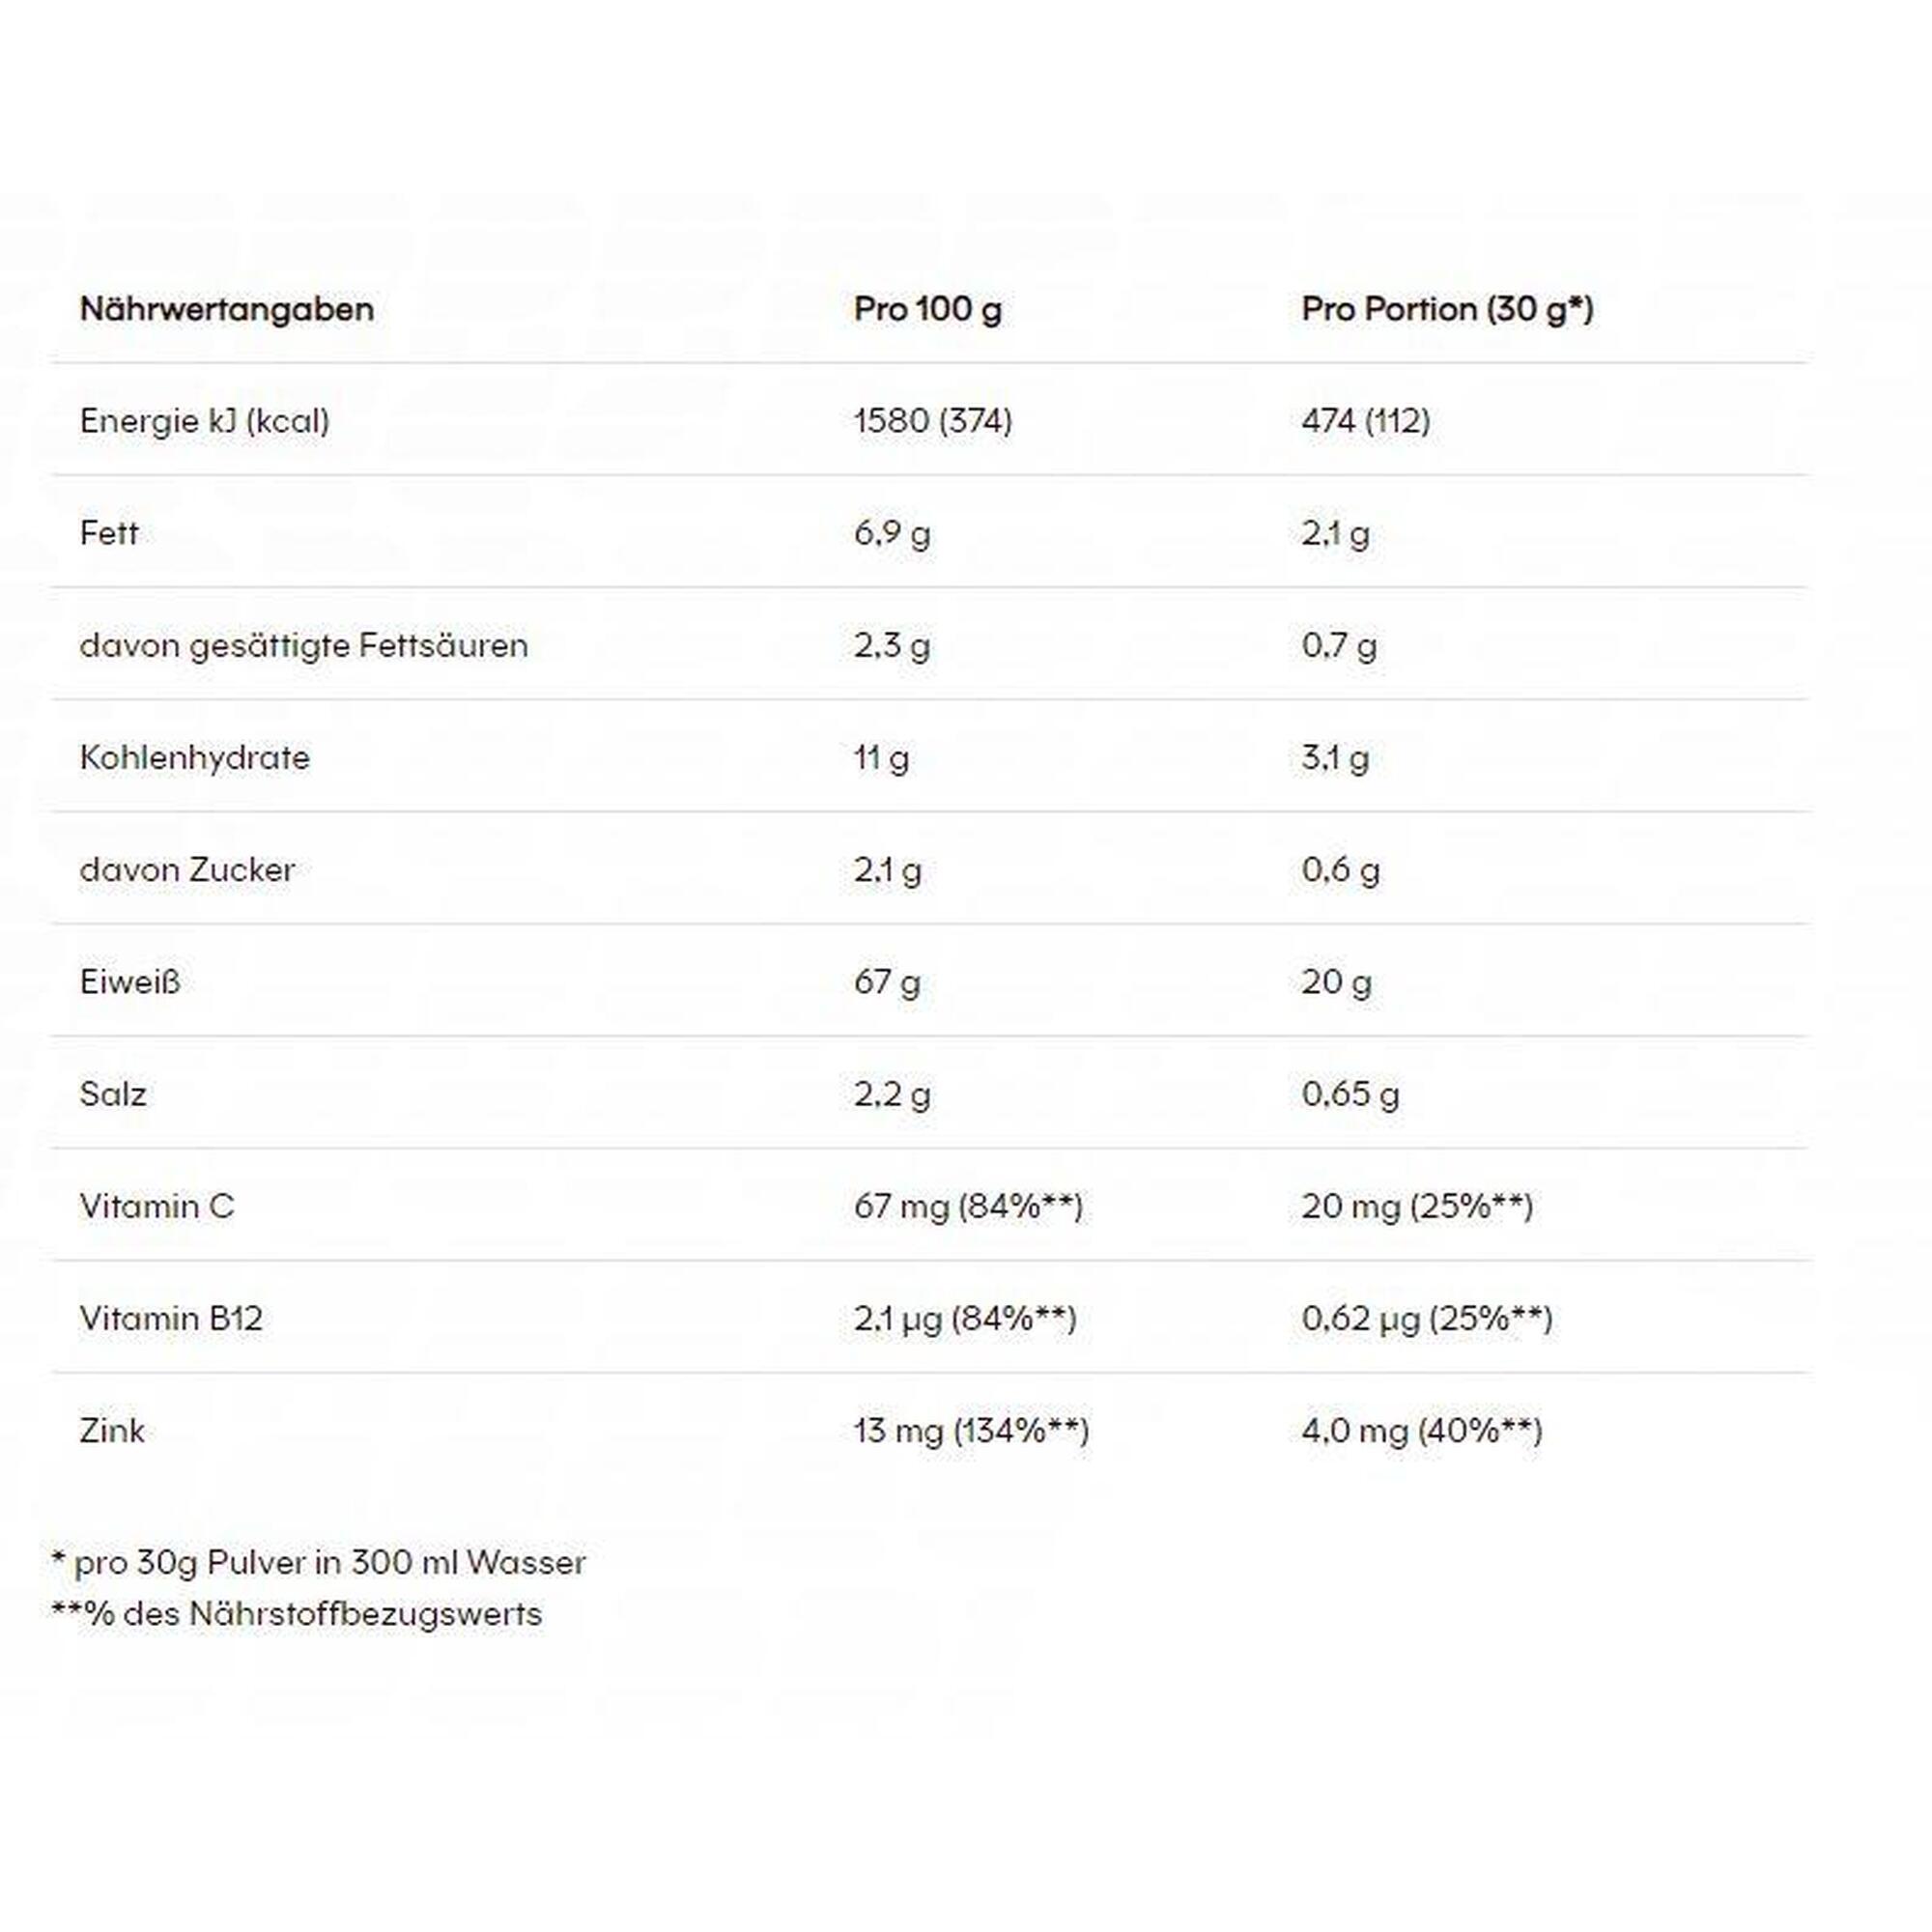 Powerbar Protein Plus Vegan Immune Support Vanilla 570g